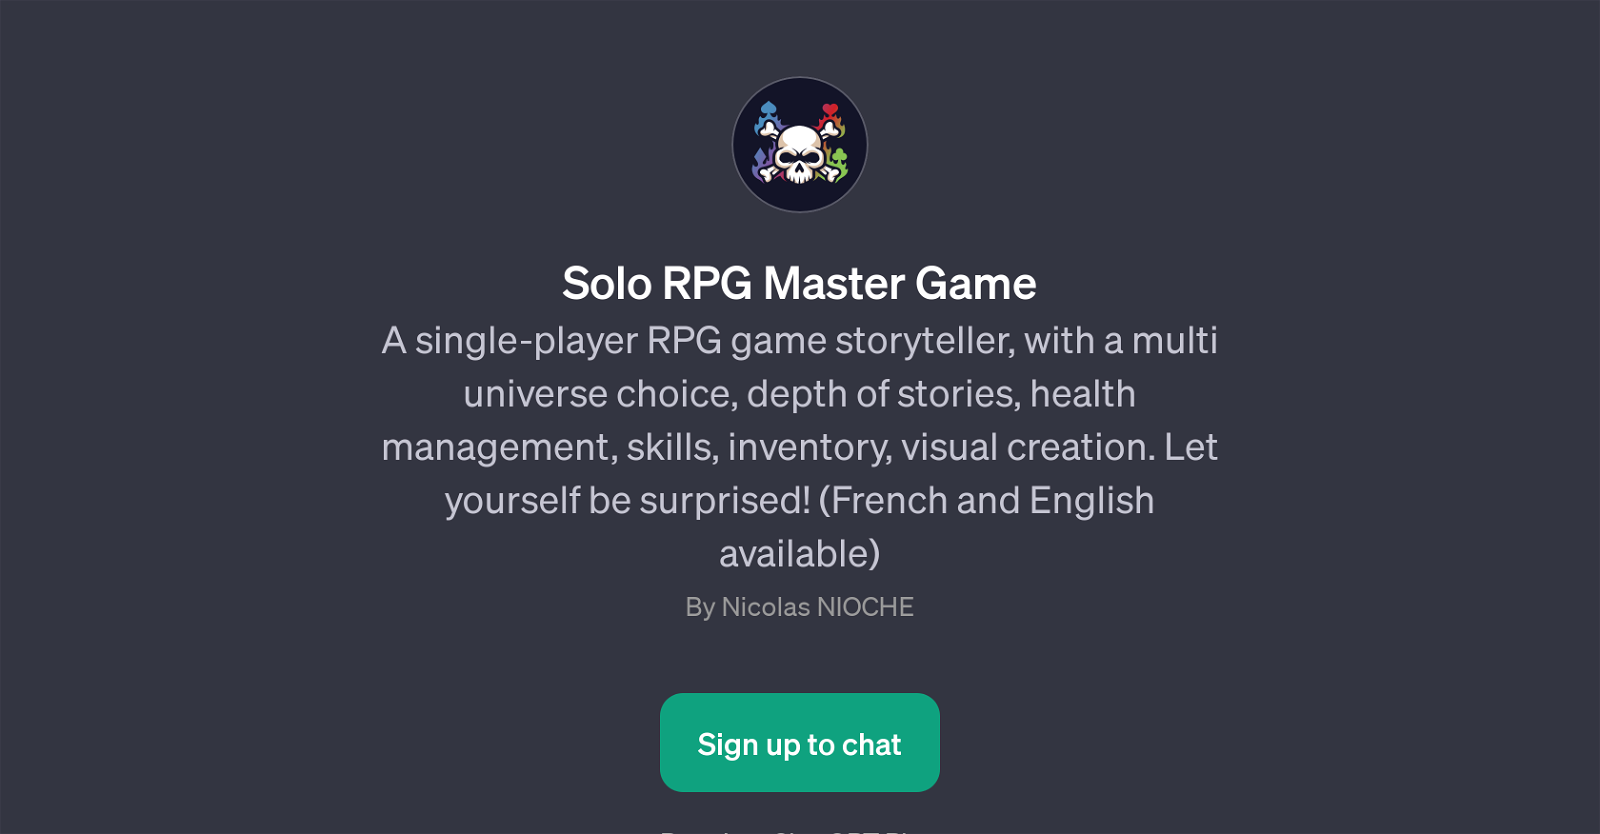 Solo RPG Master Game website